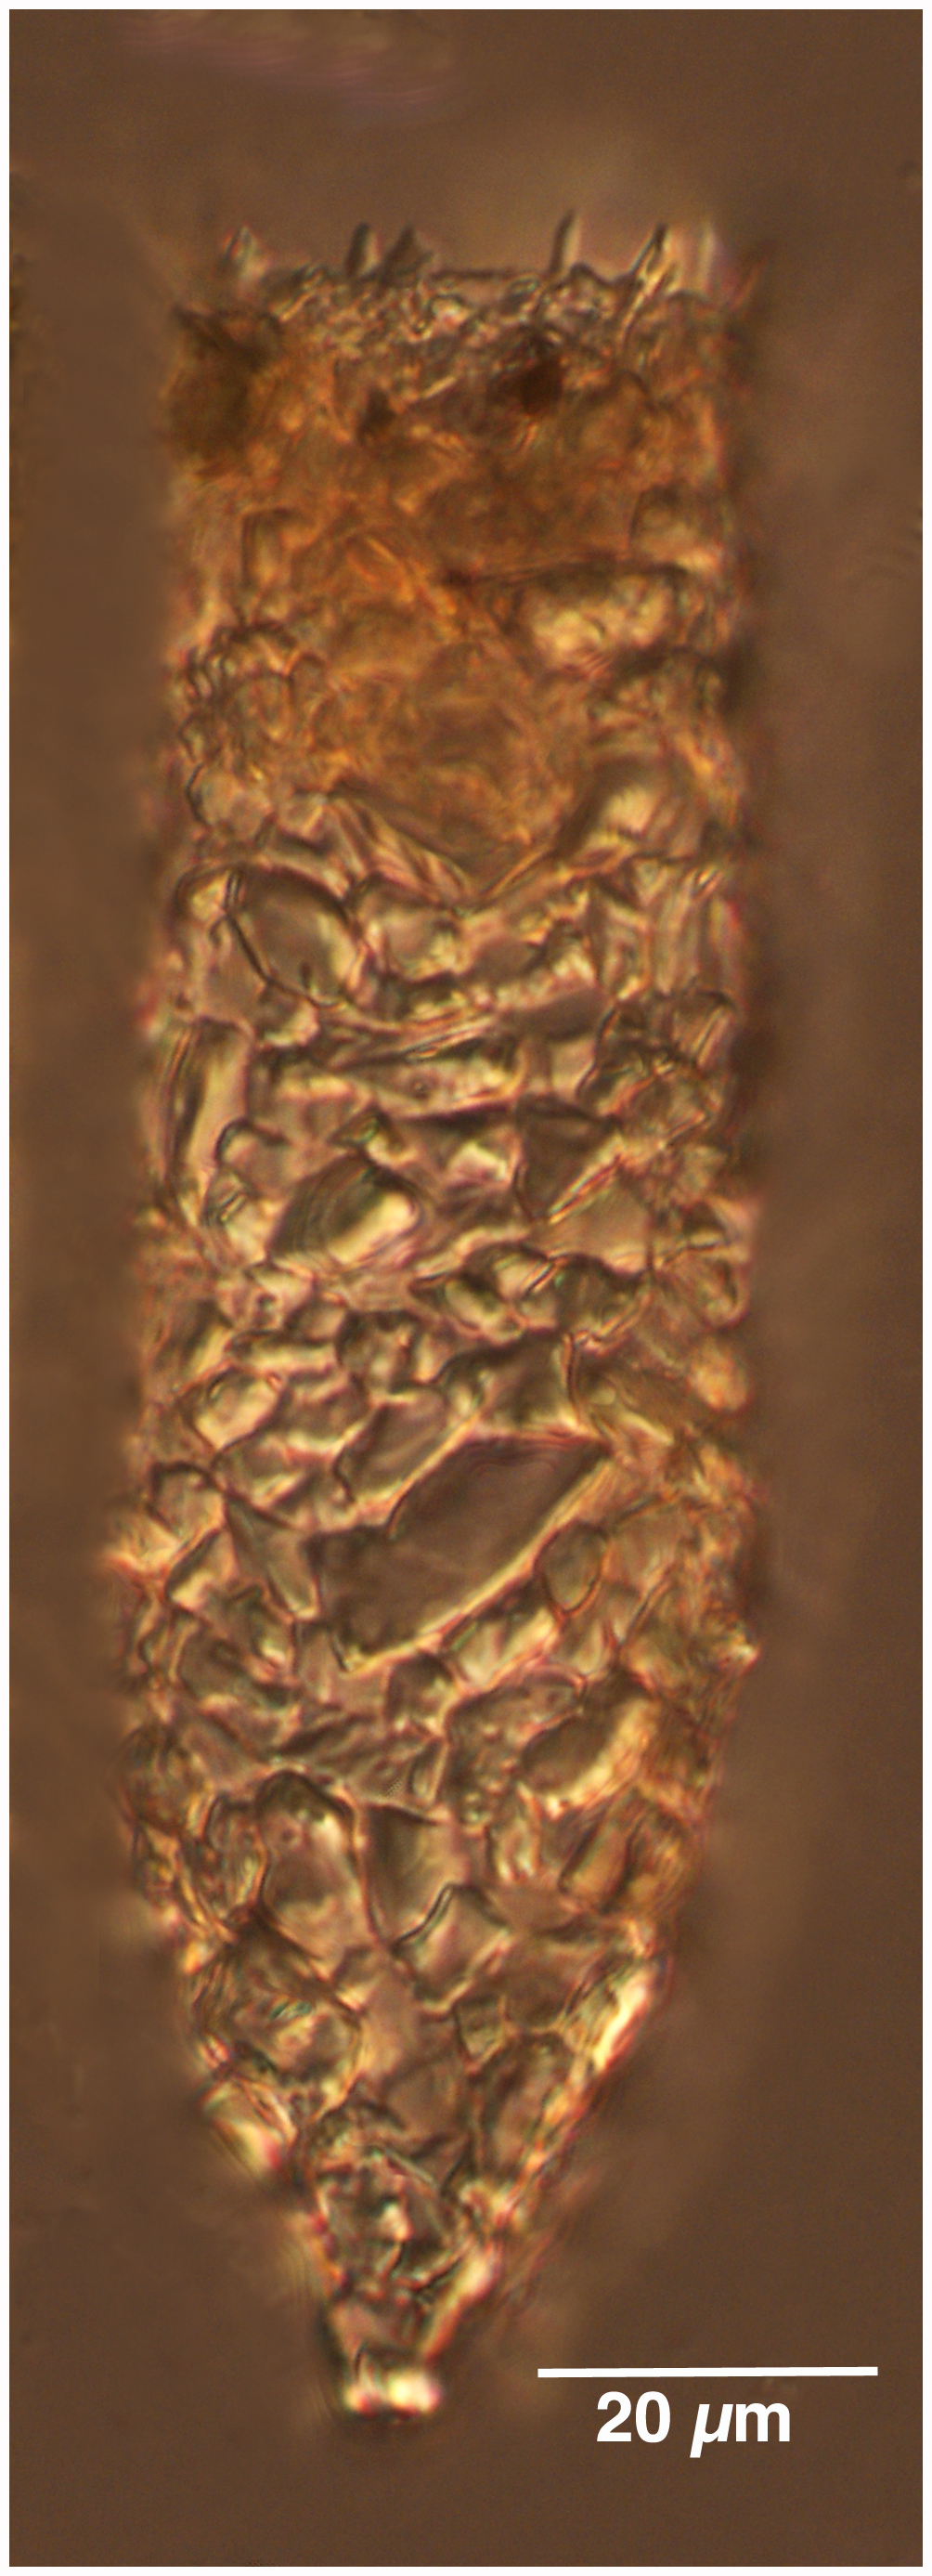 Tintinnopsis cylindrica